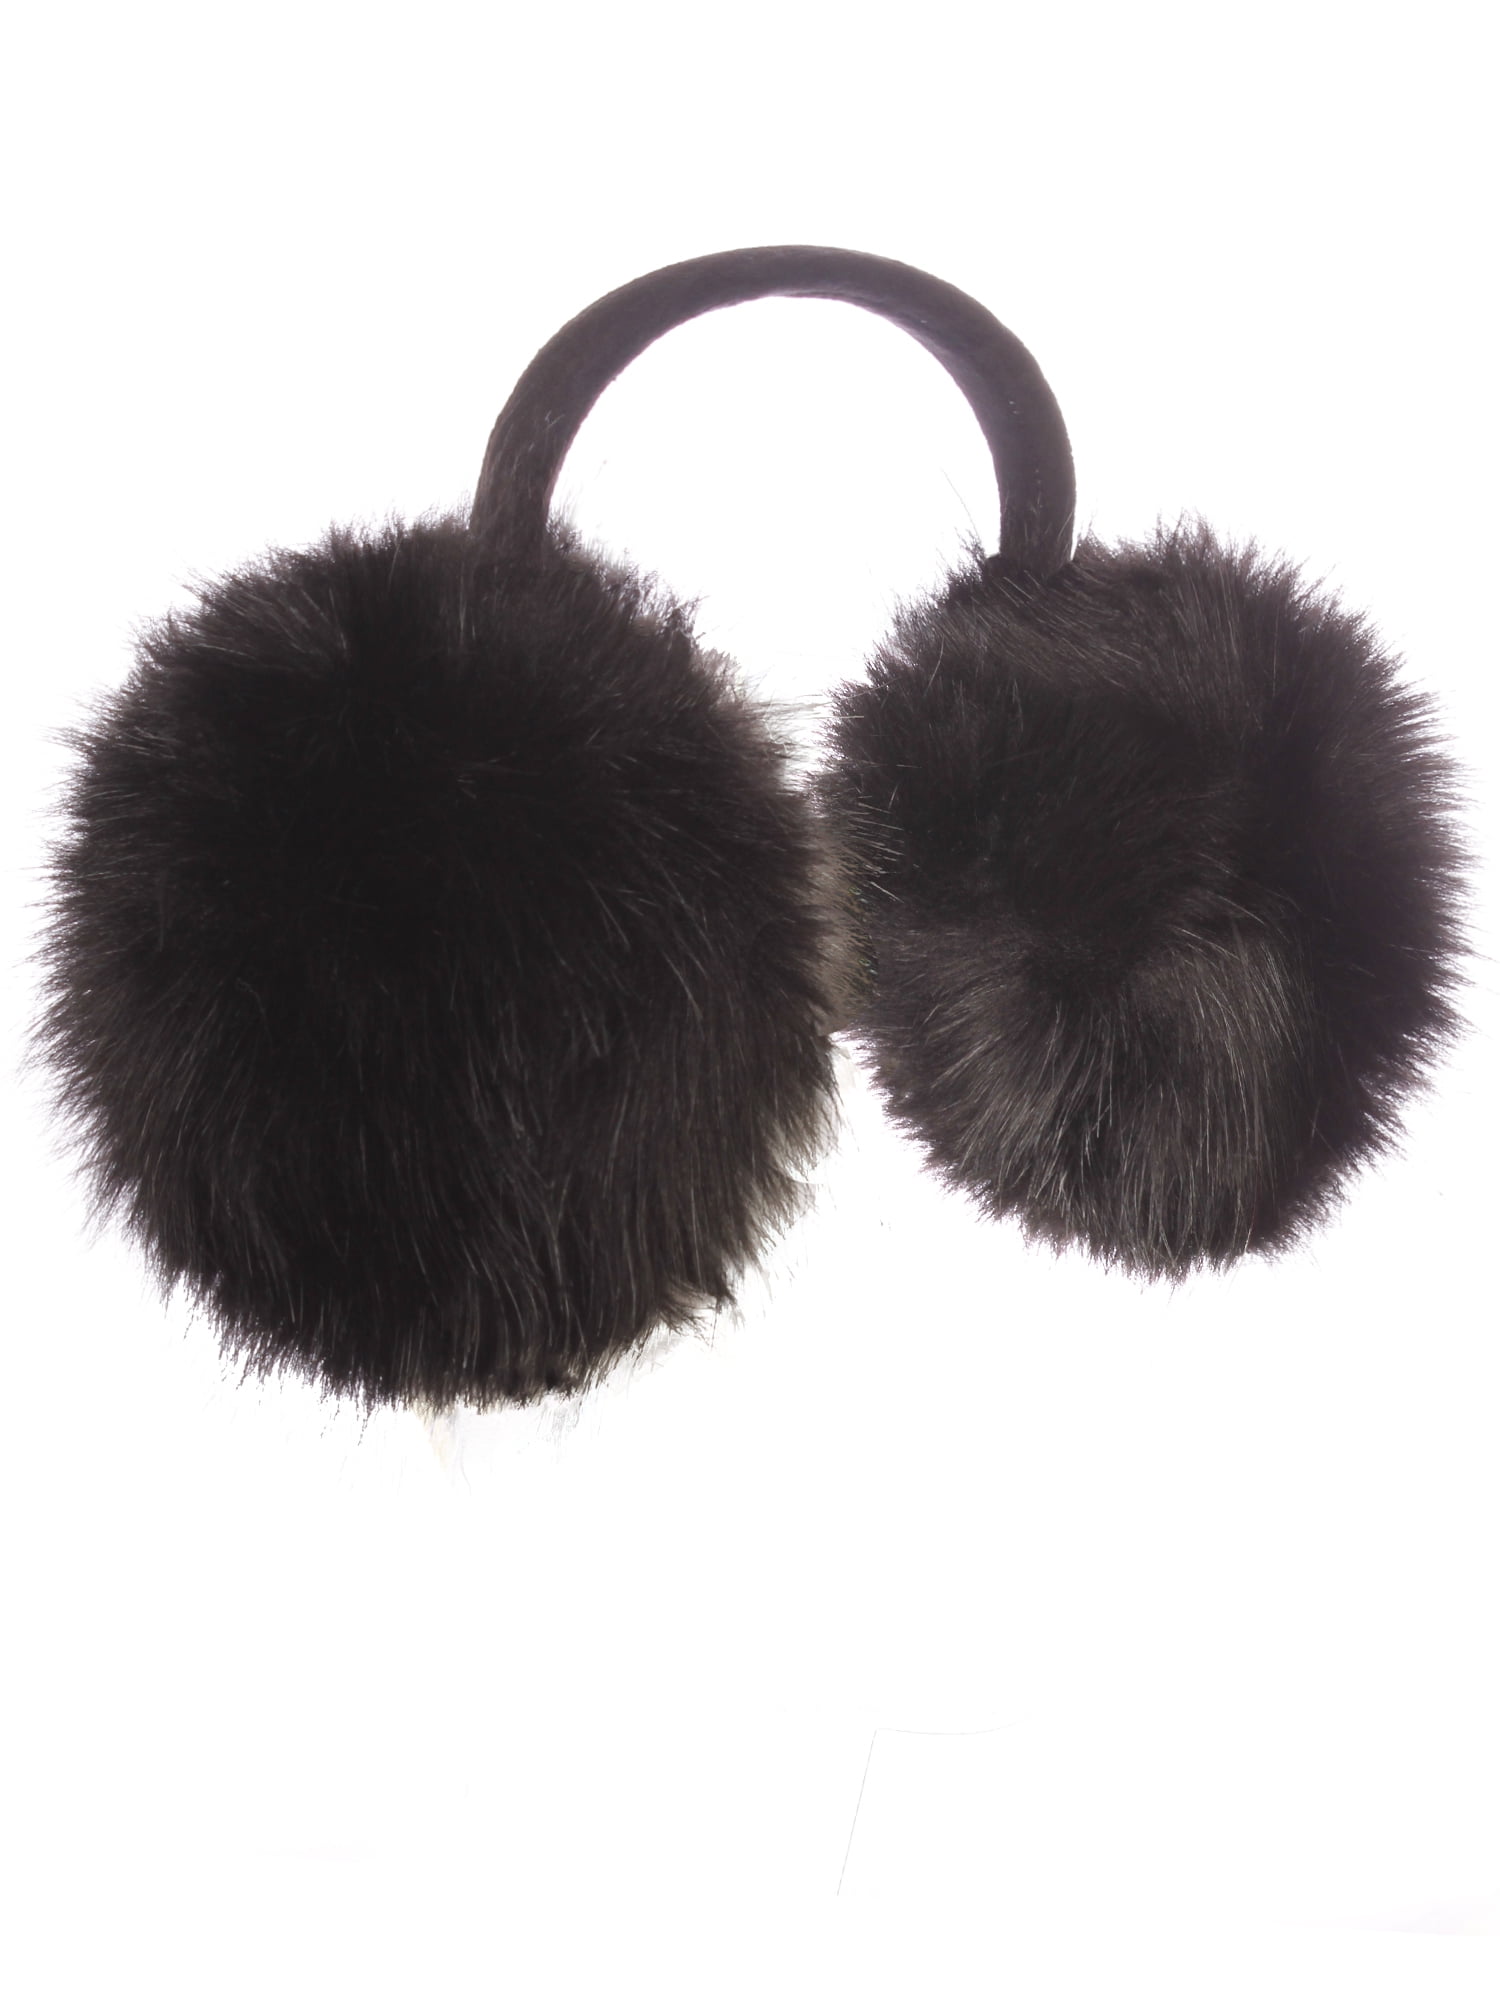 Emmalise Oversized Winter Earmuffs for Cold Weather Faux Fur Soft Ear ...